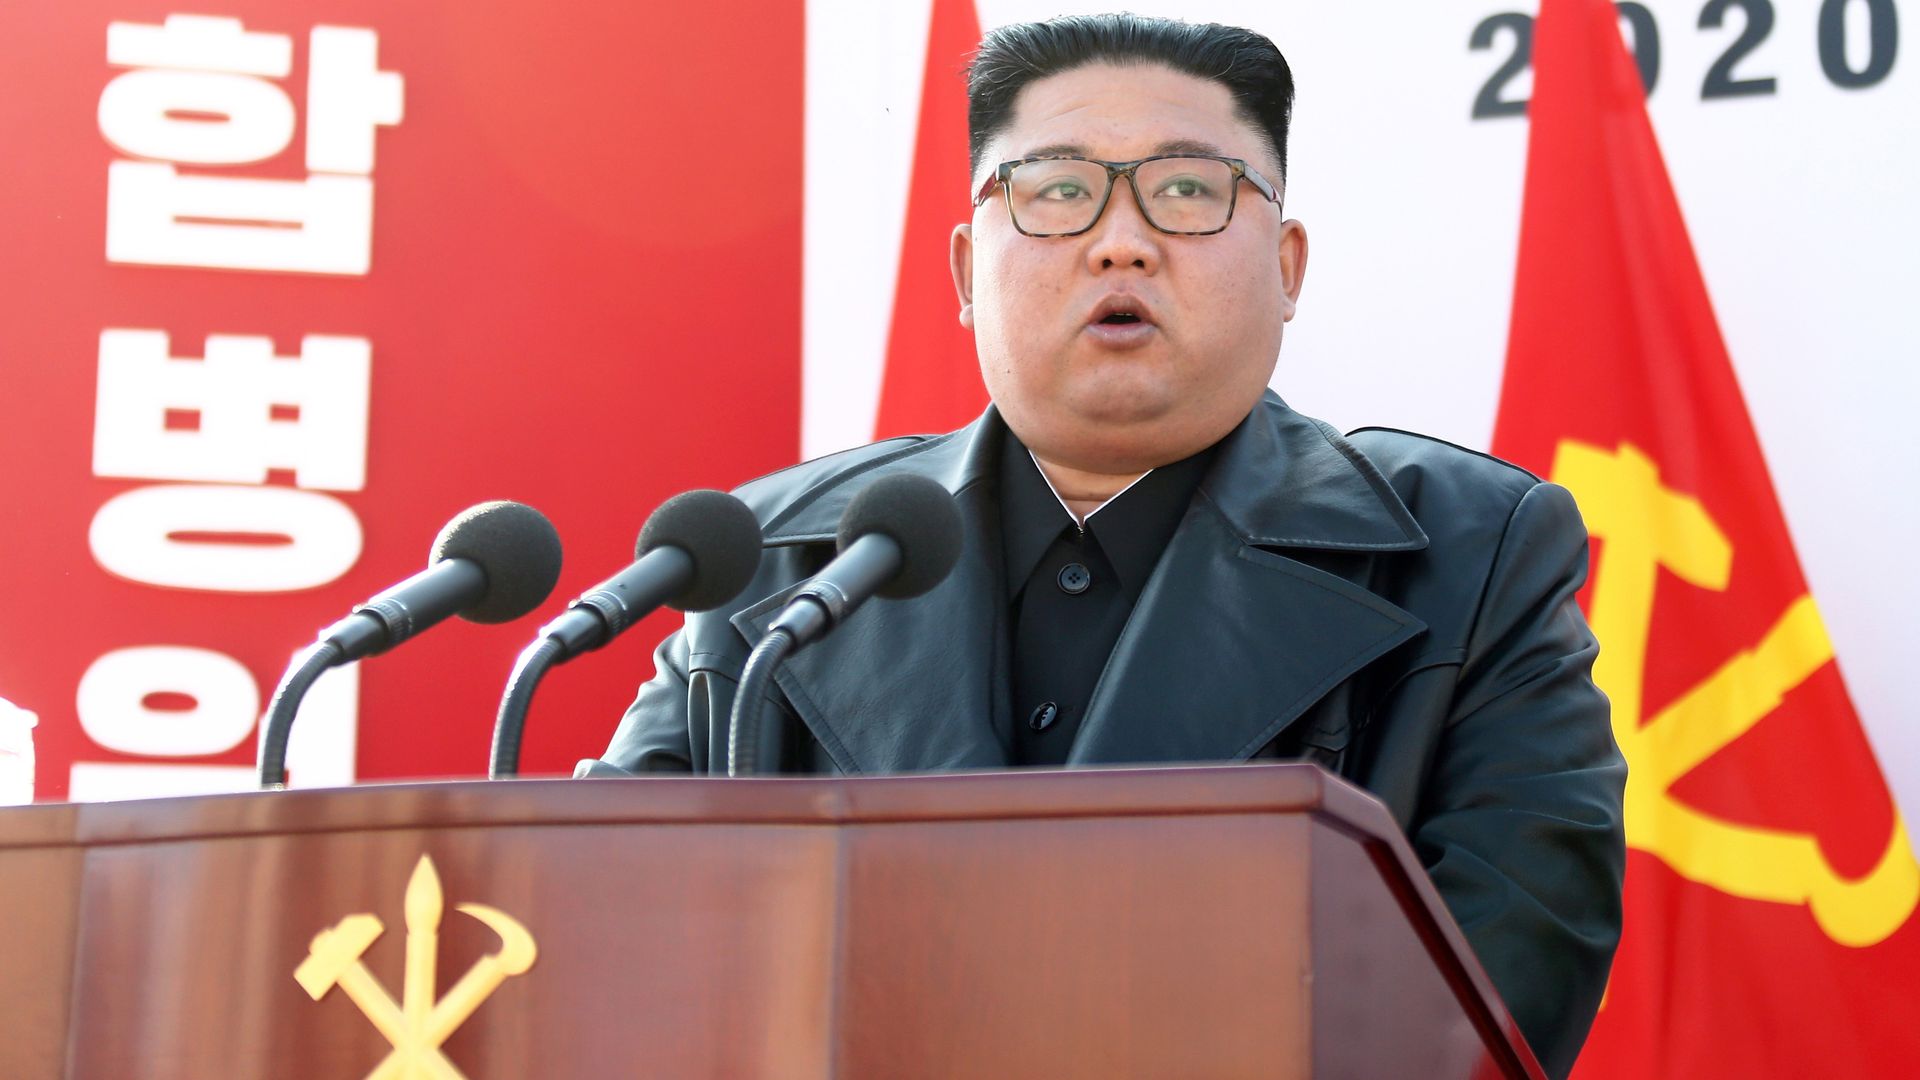 North Korean leader Kim Jong-un speaking in Pyongyang in March 2020.